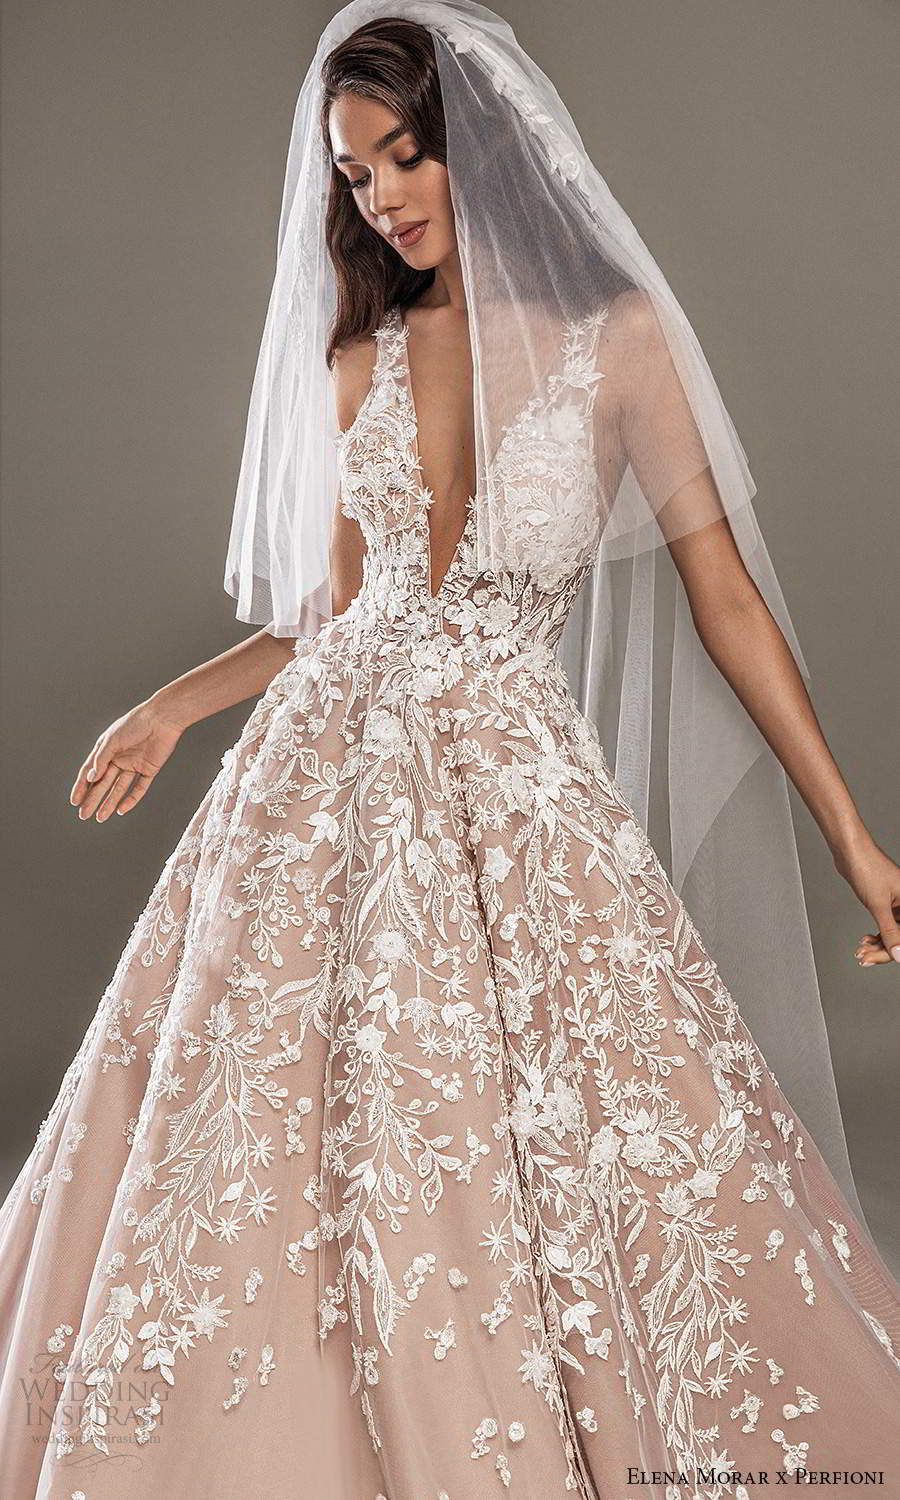 elena morar perfioni 2021 bridal sleeveless straps v neckline fully embellished a line ball gown wedding dress chapel train blush color veil (7) zv